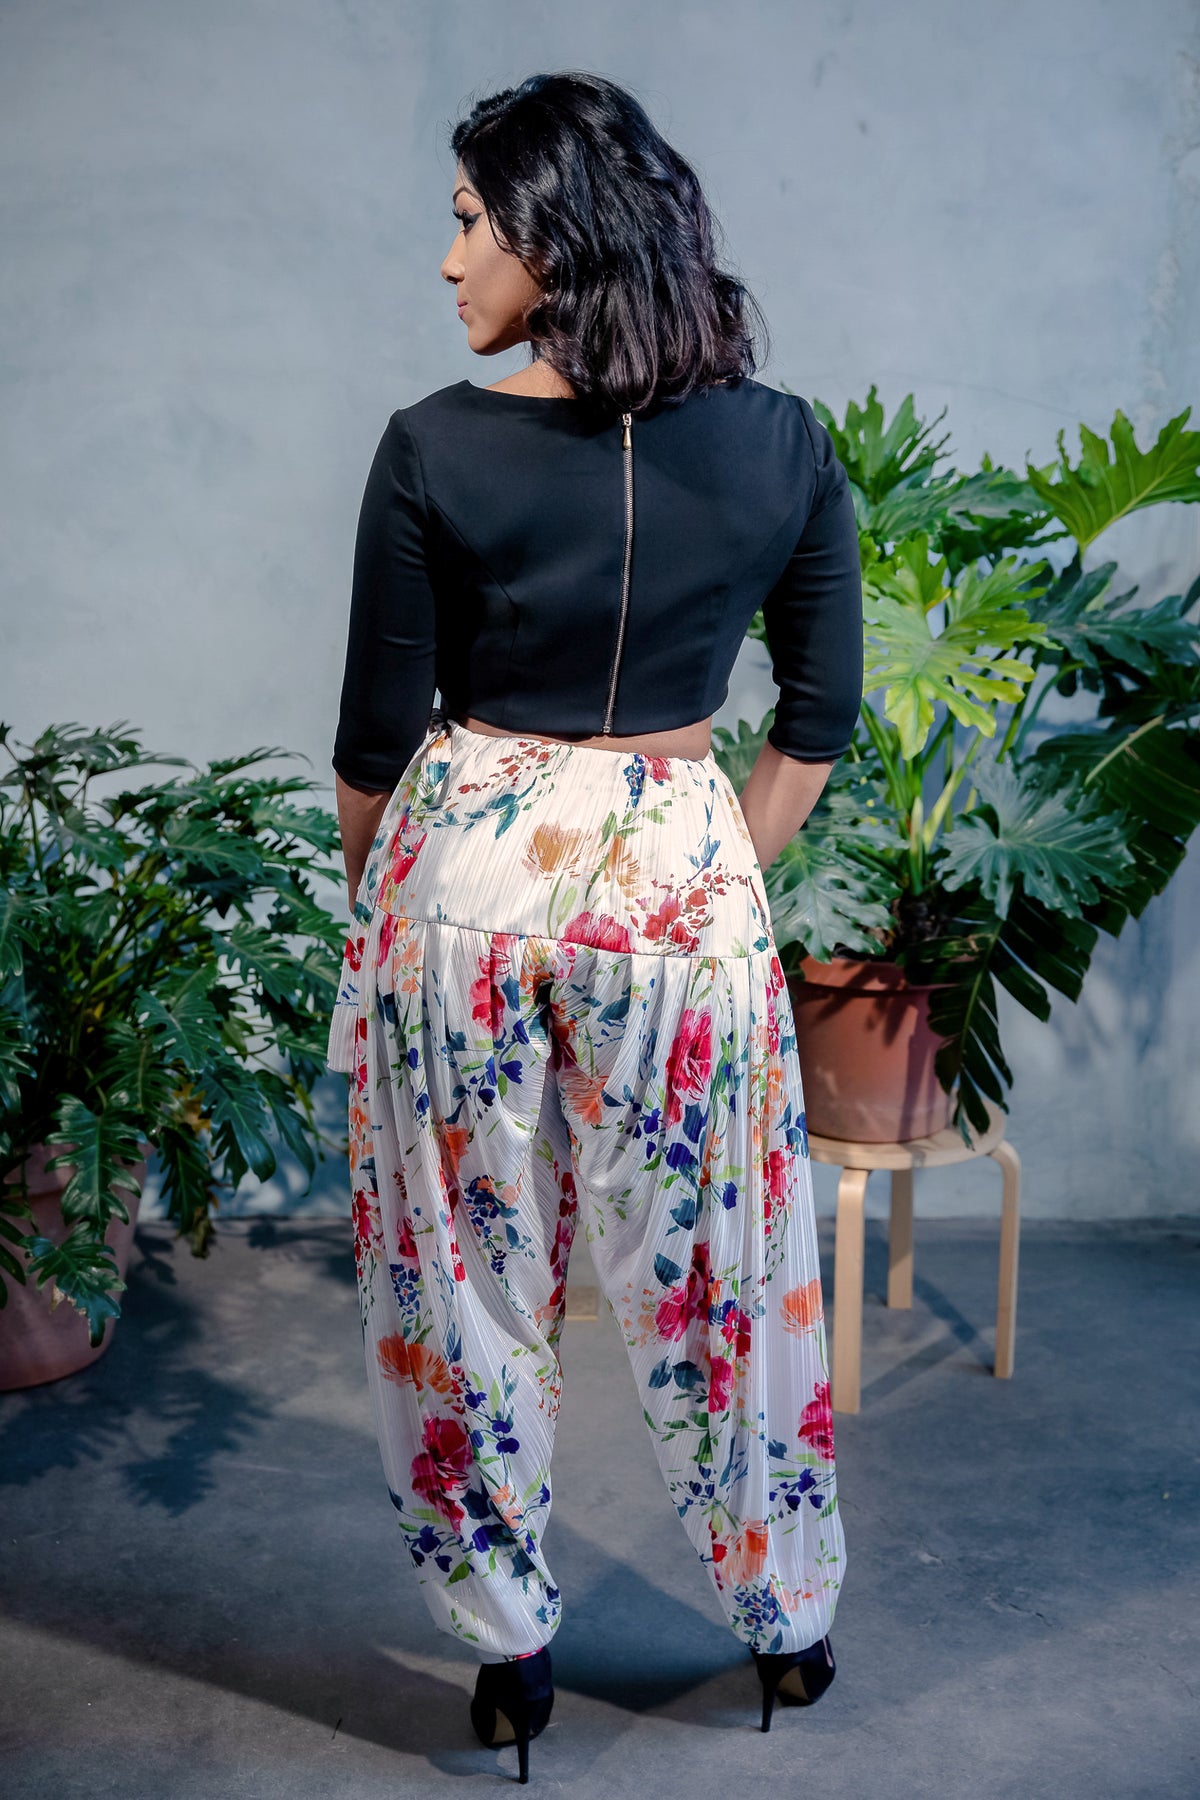 ANOOR Stretch Top Half Sleeve - Back View - Harleen Kaur - South Asian Womenswear